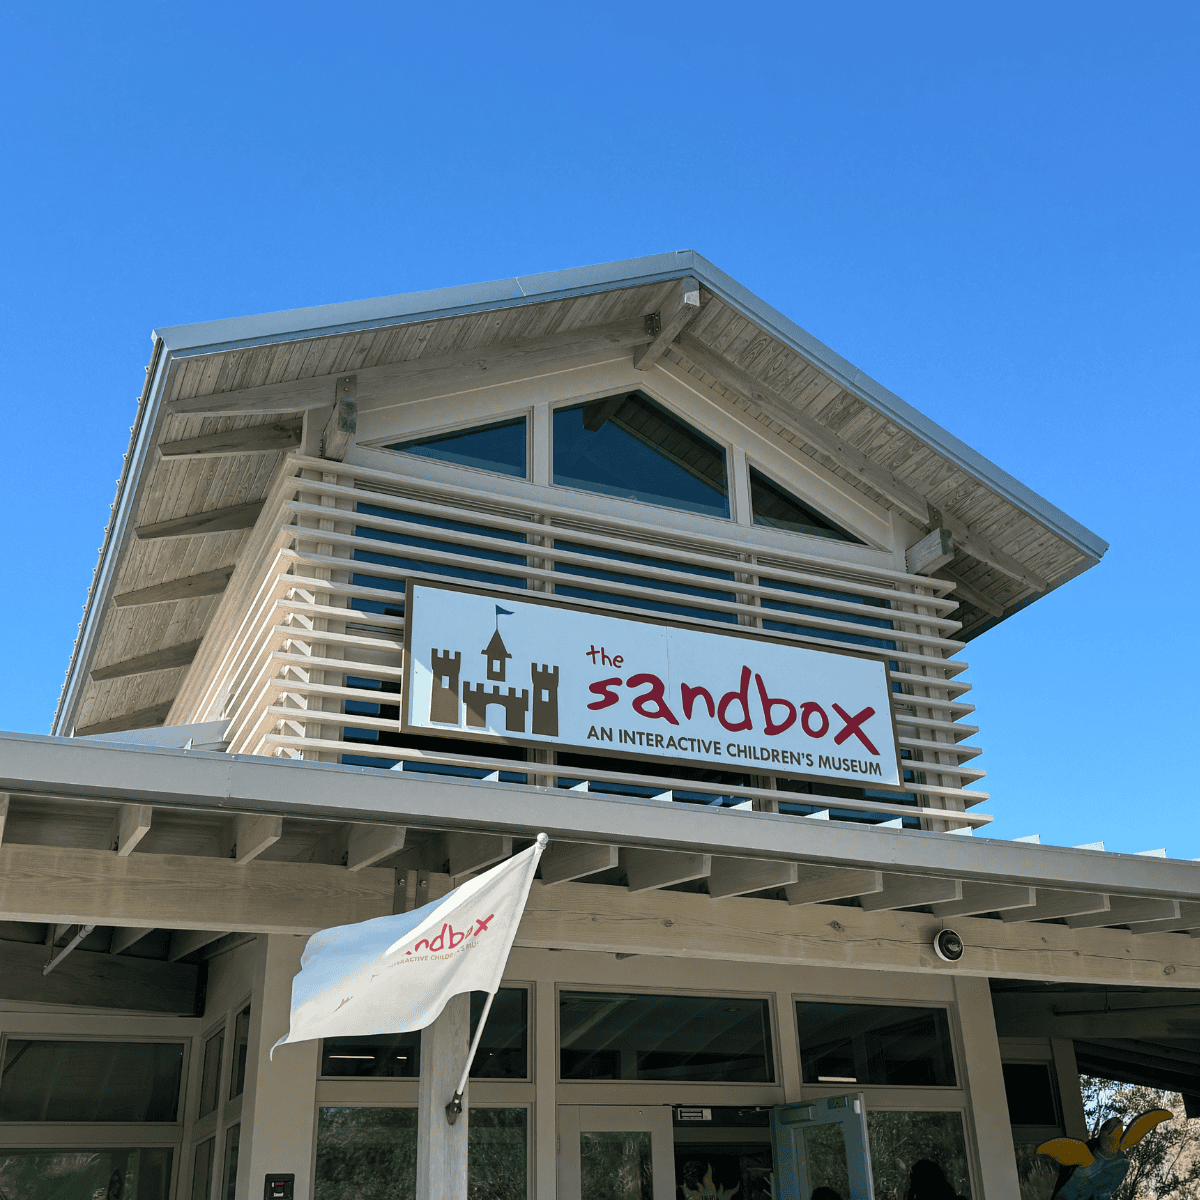 Visiting the Sandbox Children’s Museum, Hilton Head Island